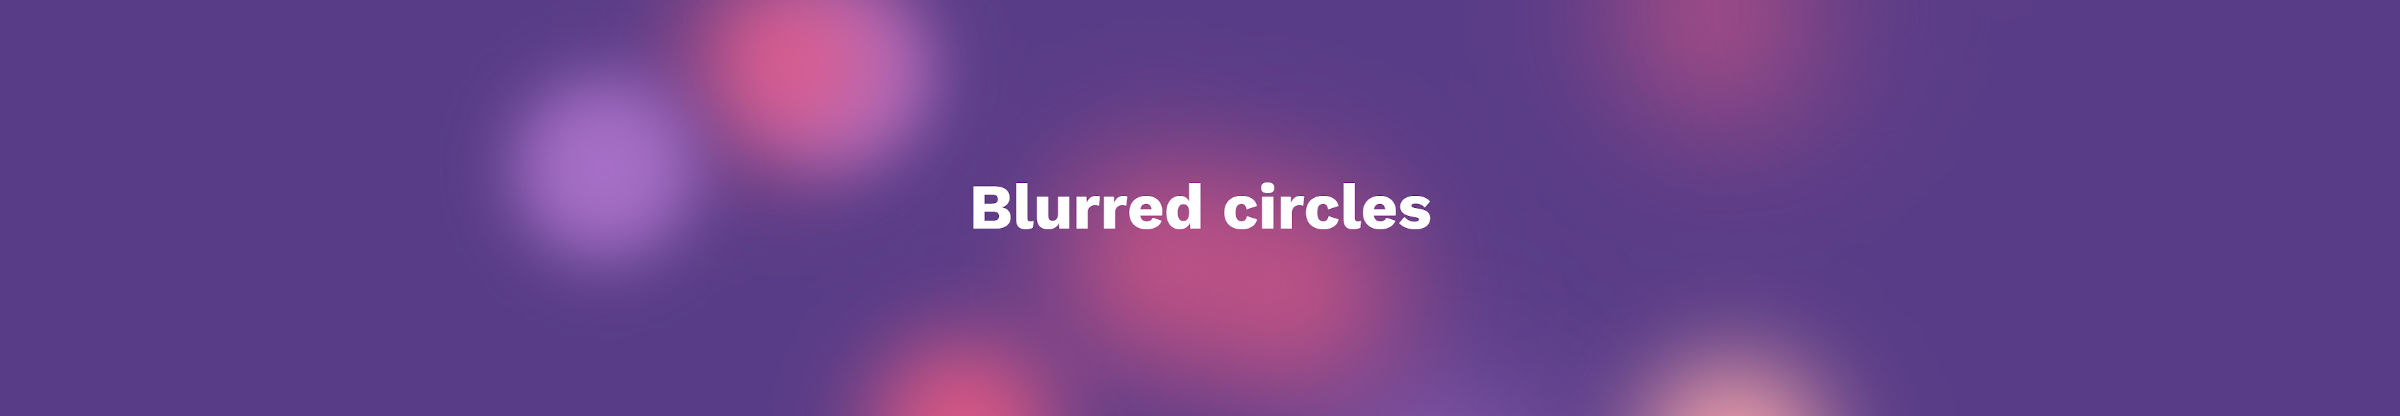 animated blurred circles